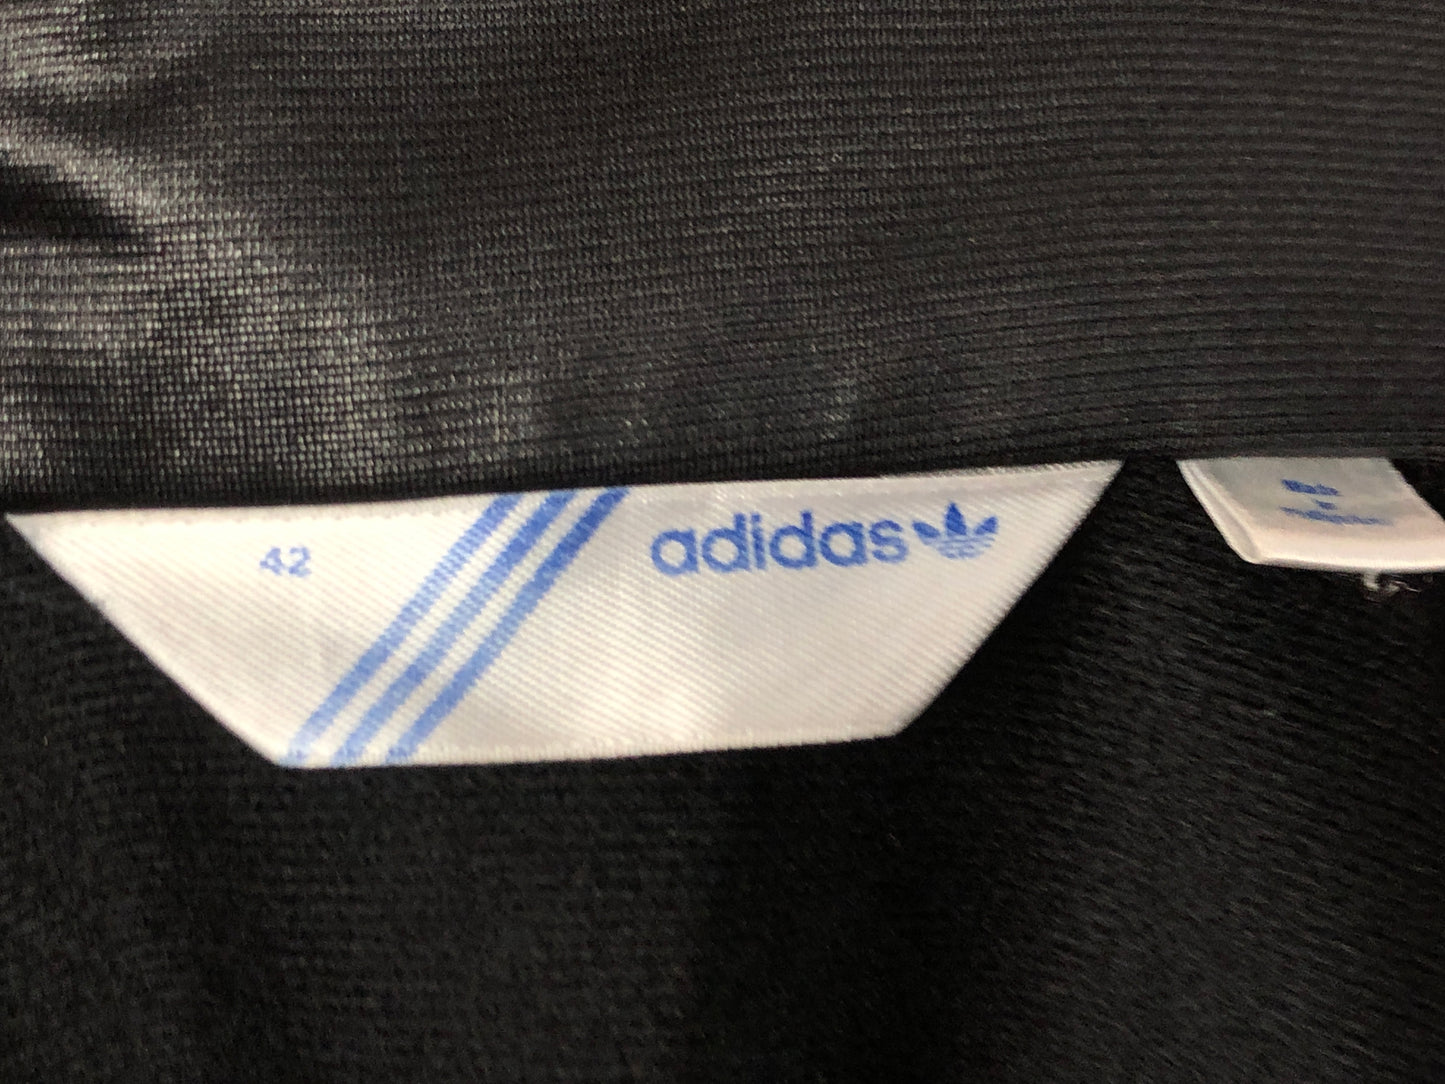 Adidas Chile62 Vintage Women's Track Jacket - Medium Black Polyester